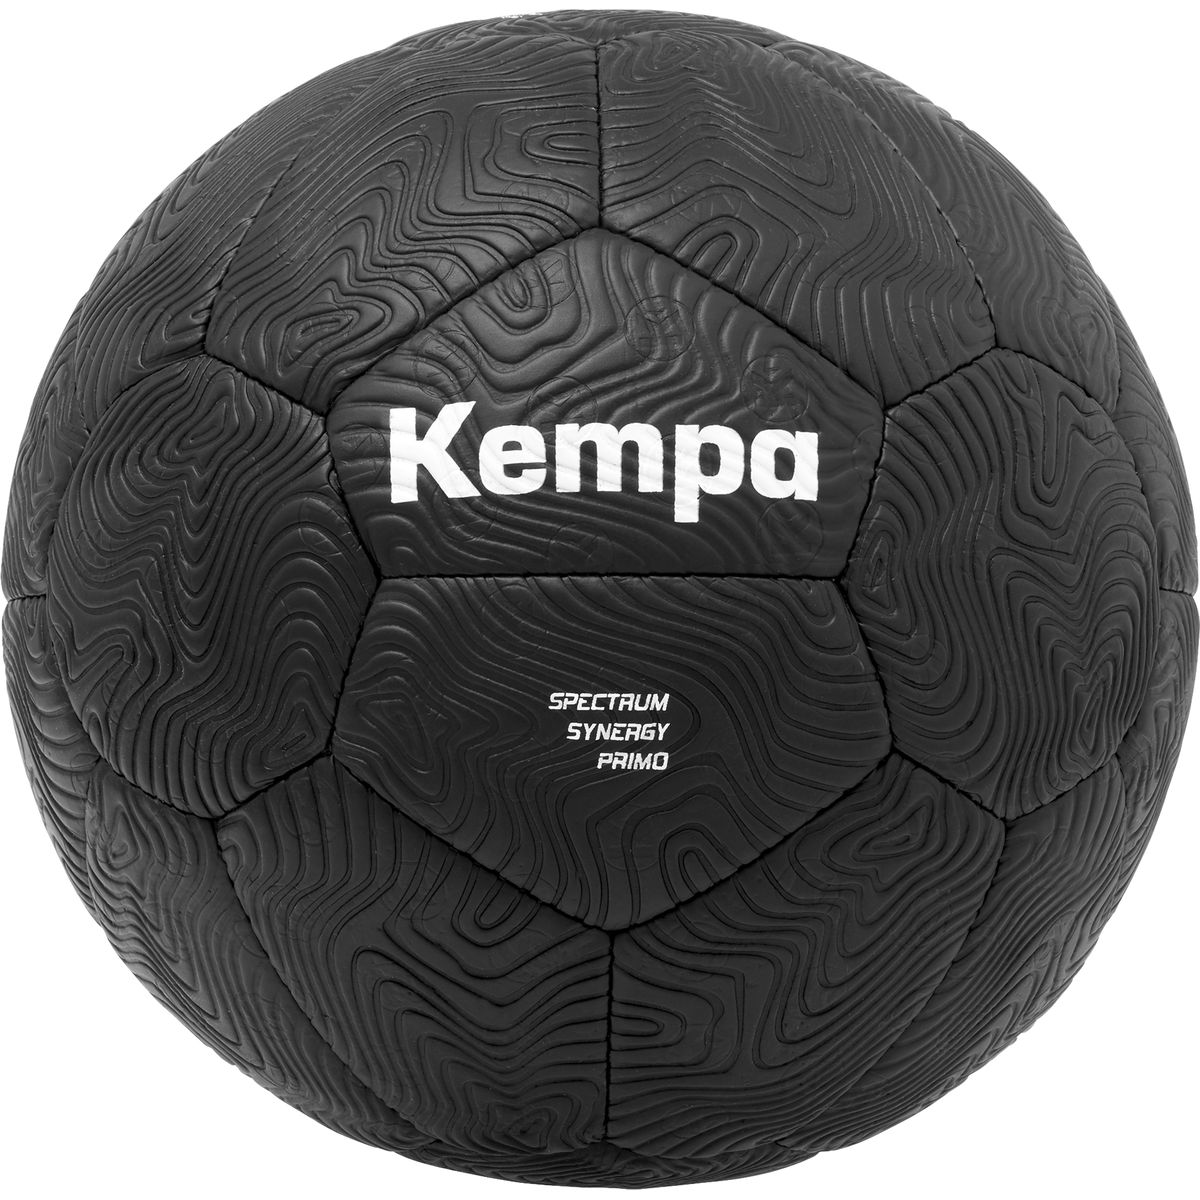 Kempa Spectrum Synergy Primo Black&White Handball